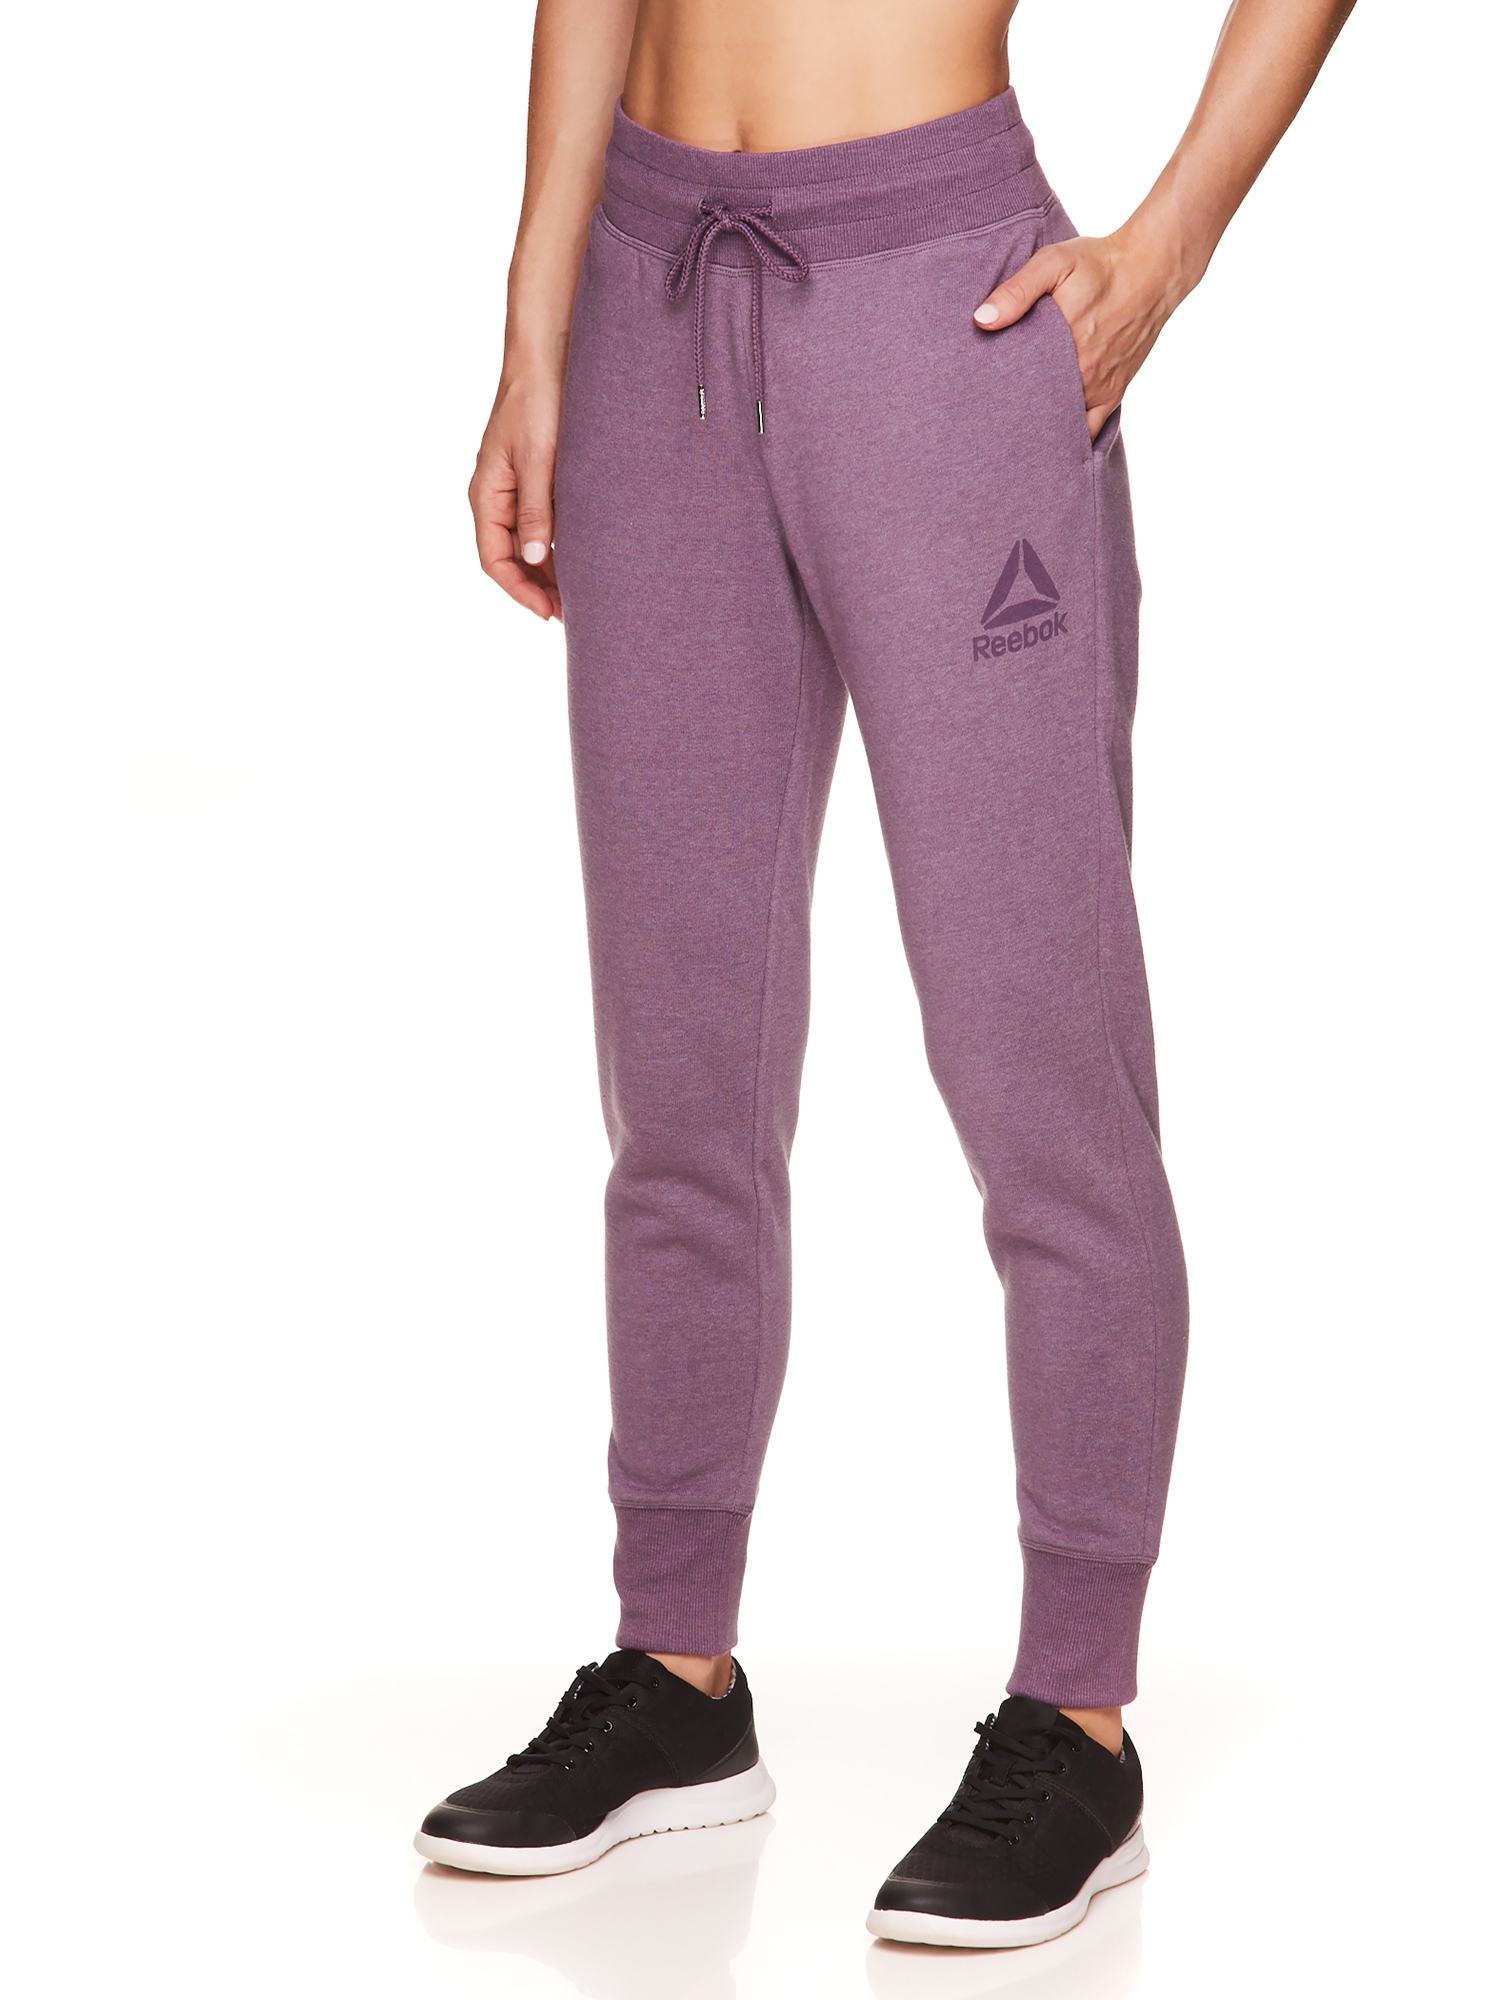 Reebok Womens' Cozy Fleece Jogger Sweatpants with Pockets - image 3 of 4